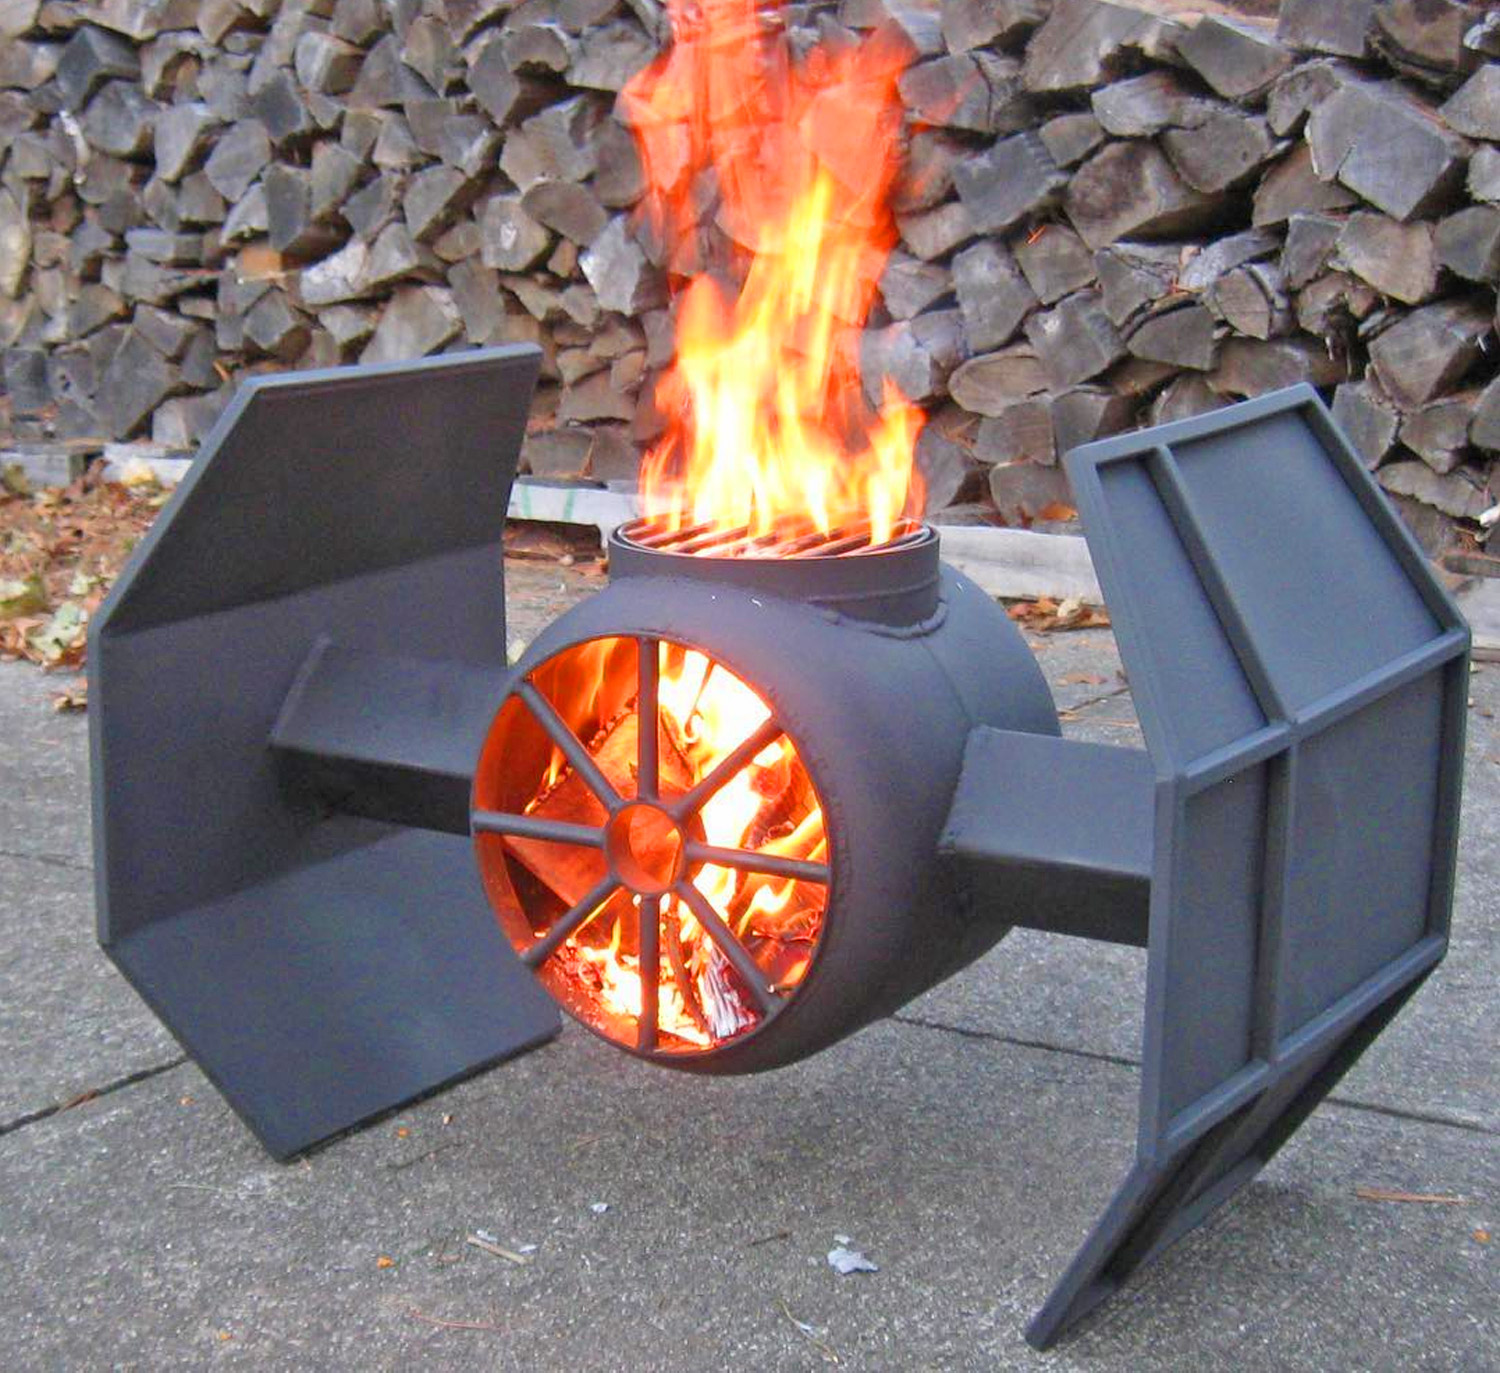 Star Wars Tie Fighter Fire Pits, Darth Vader Fire Pit